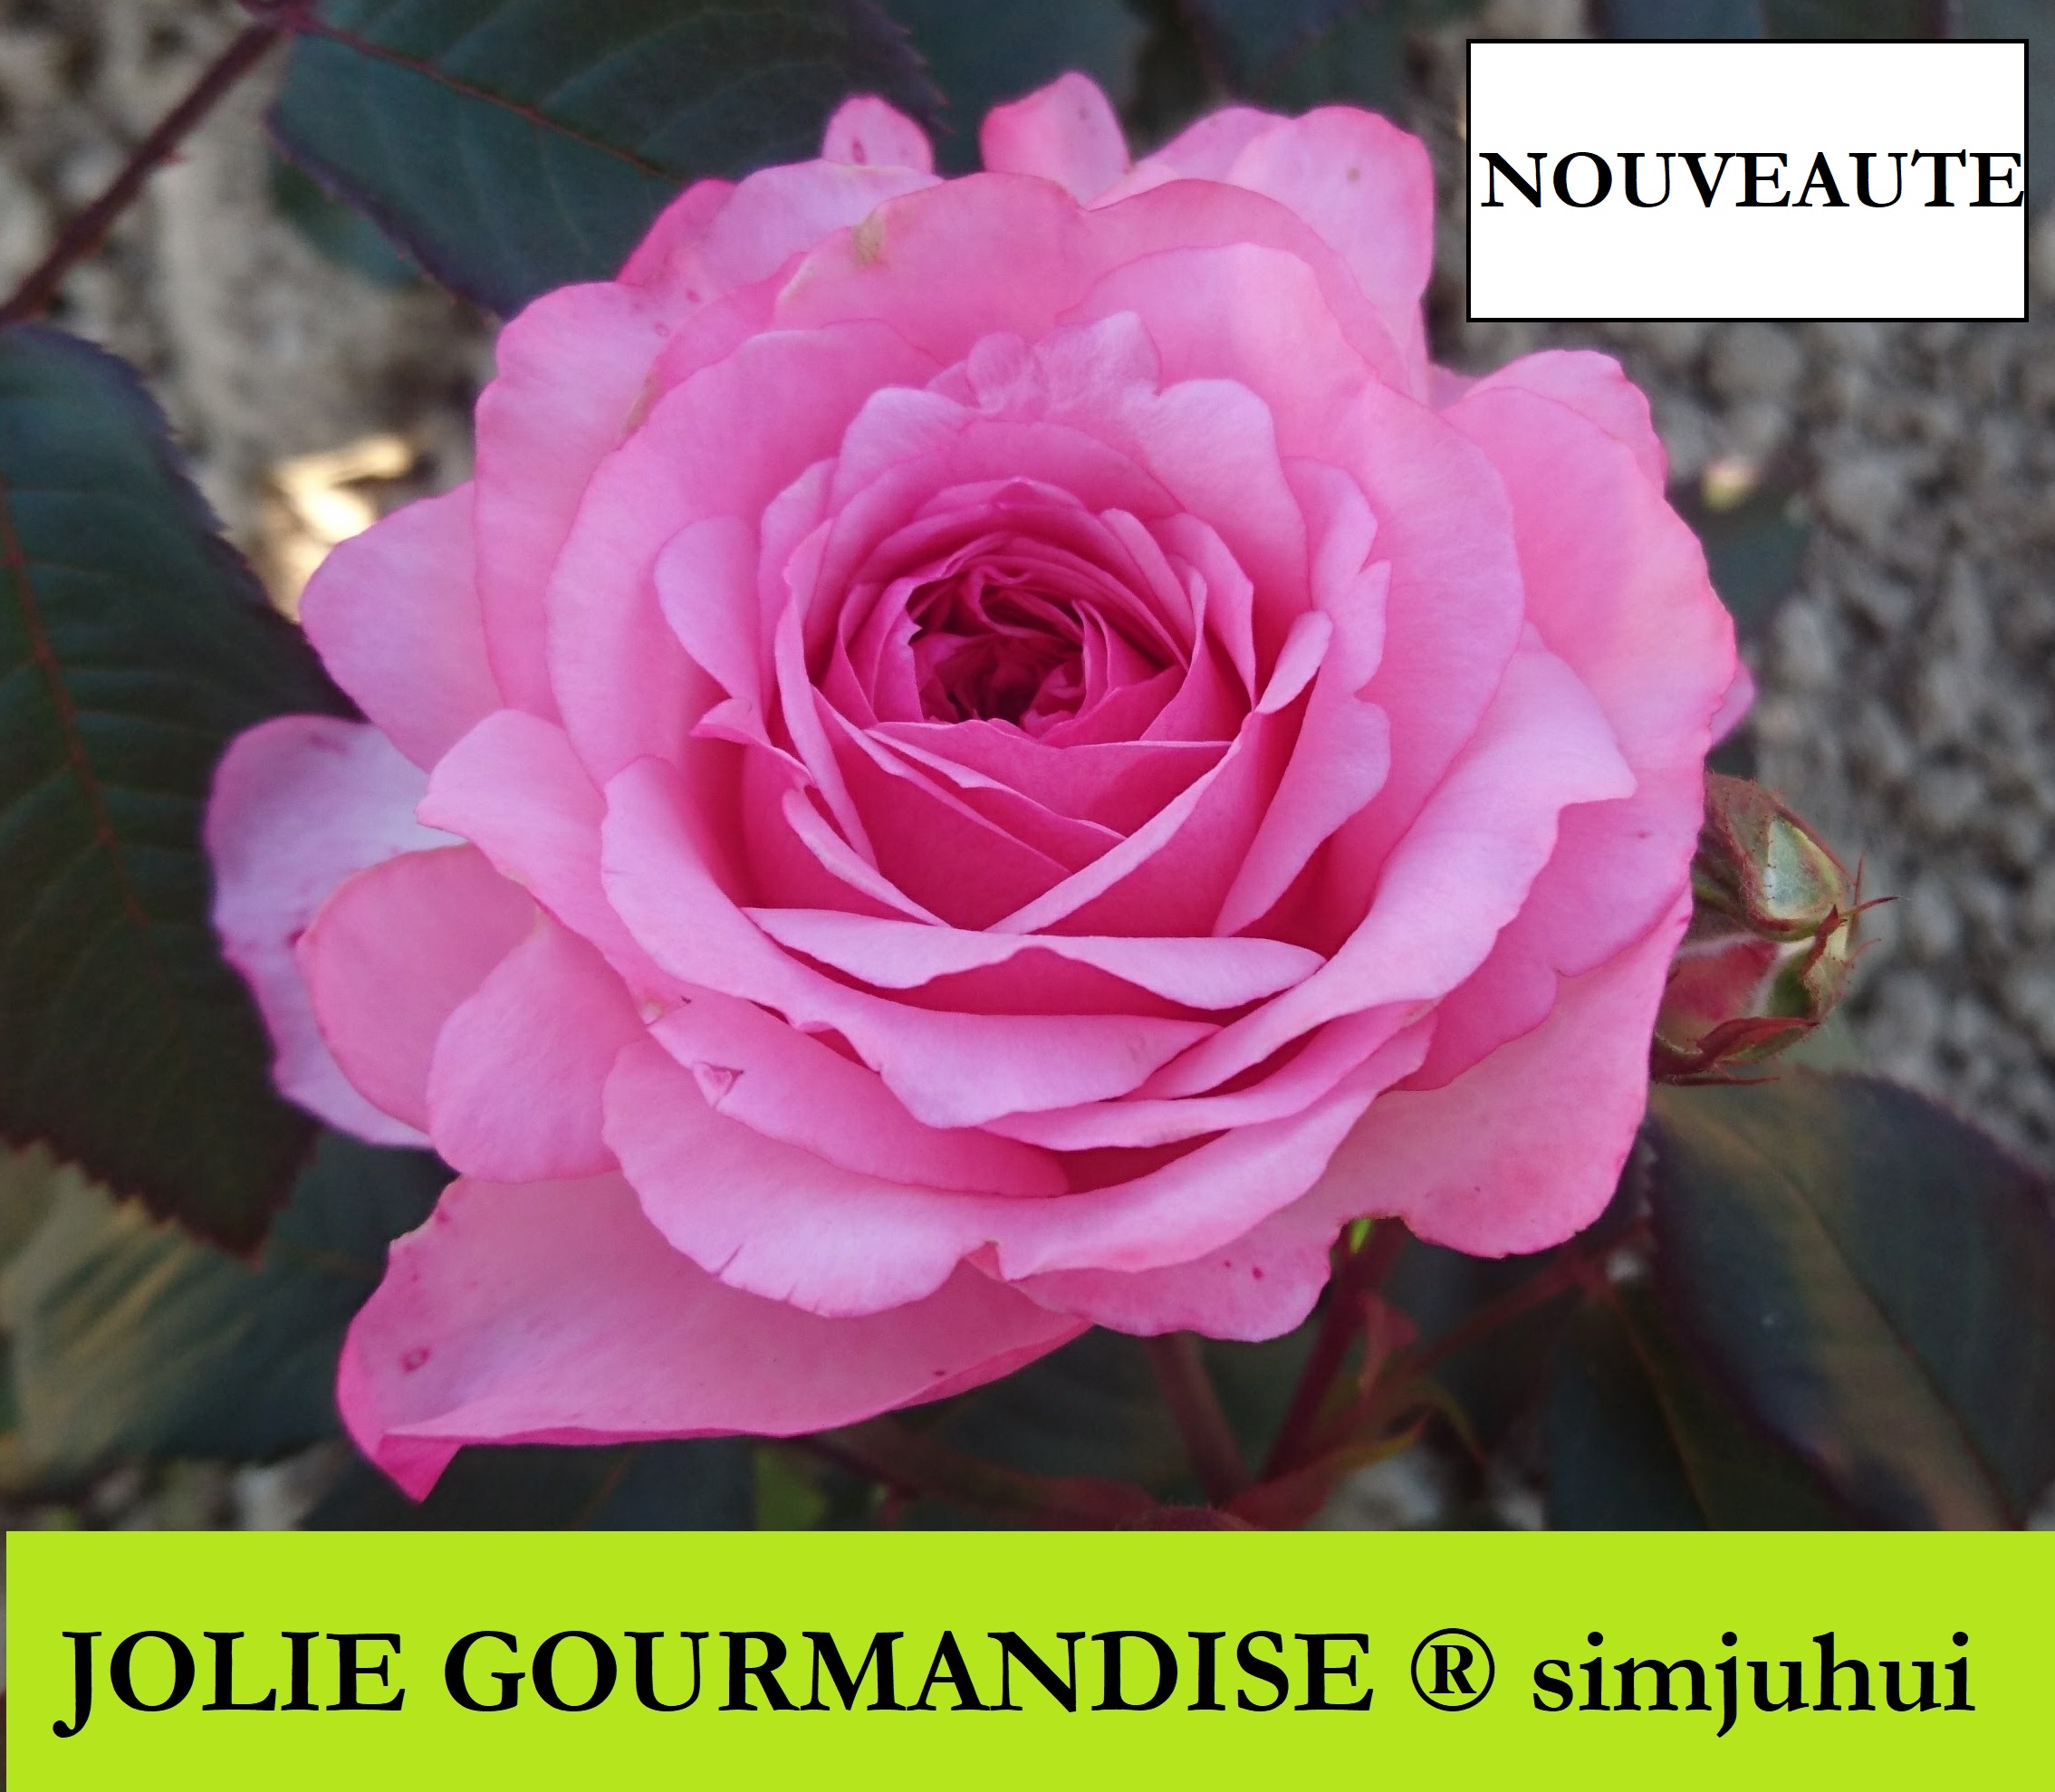 JOLIE GOURMANDISE &#x000000ae; simjuhui